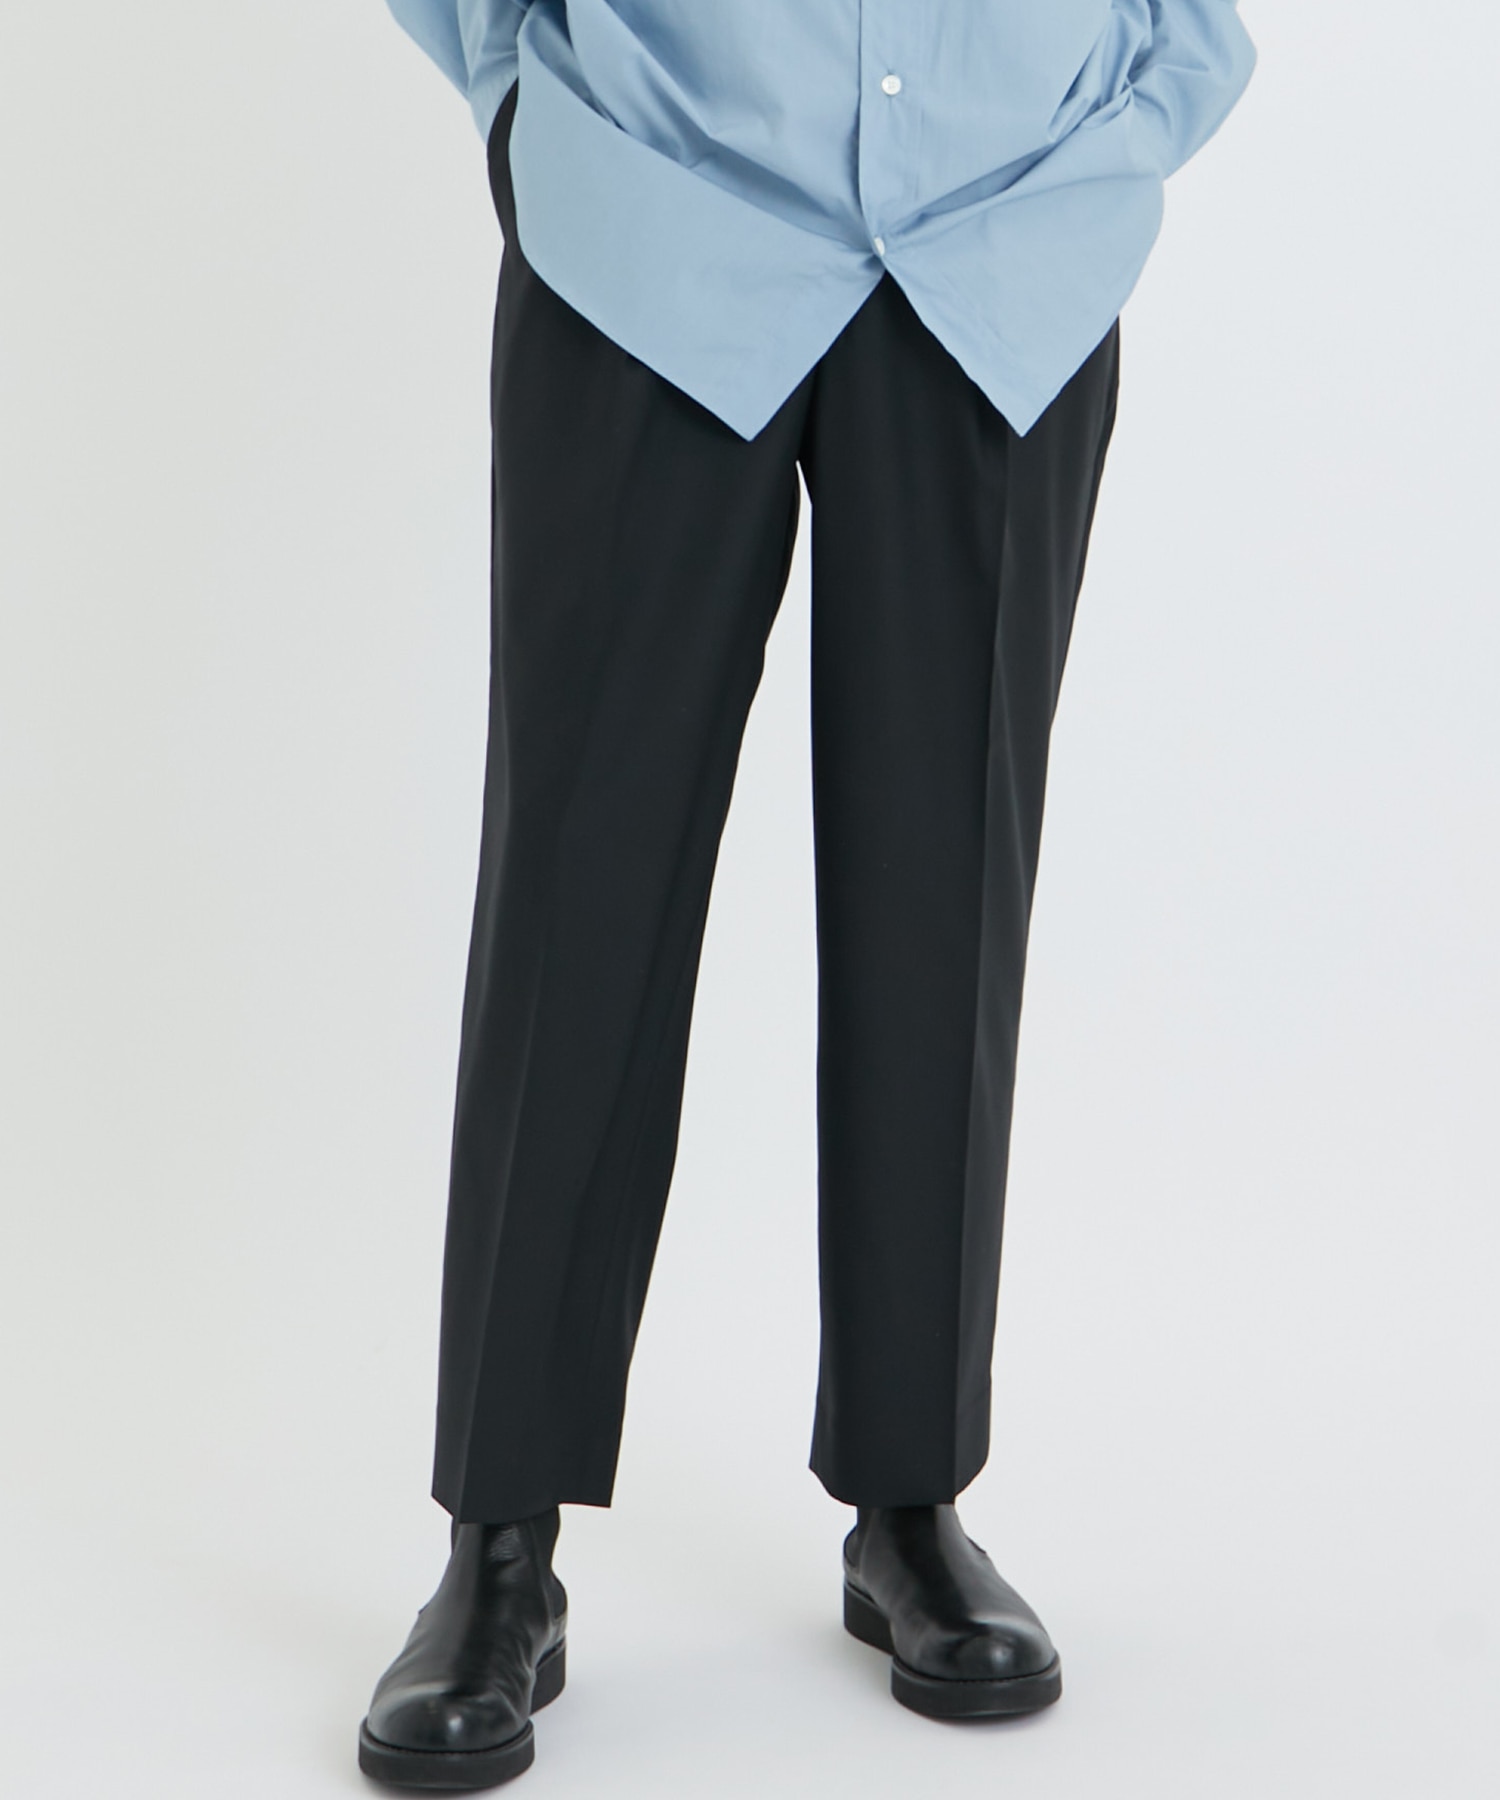 MARKAWARE classic fit trousers サイズ2 - スラックス